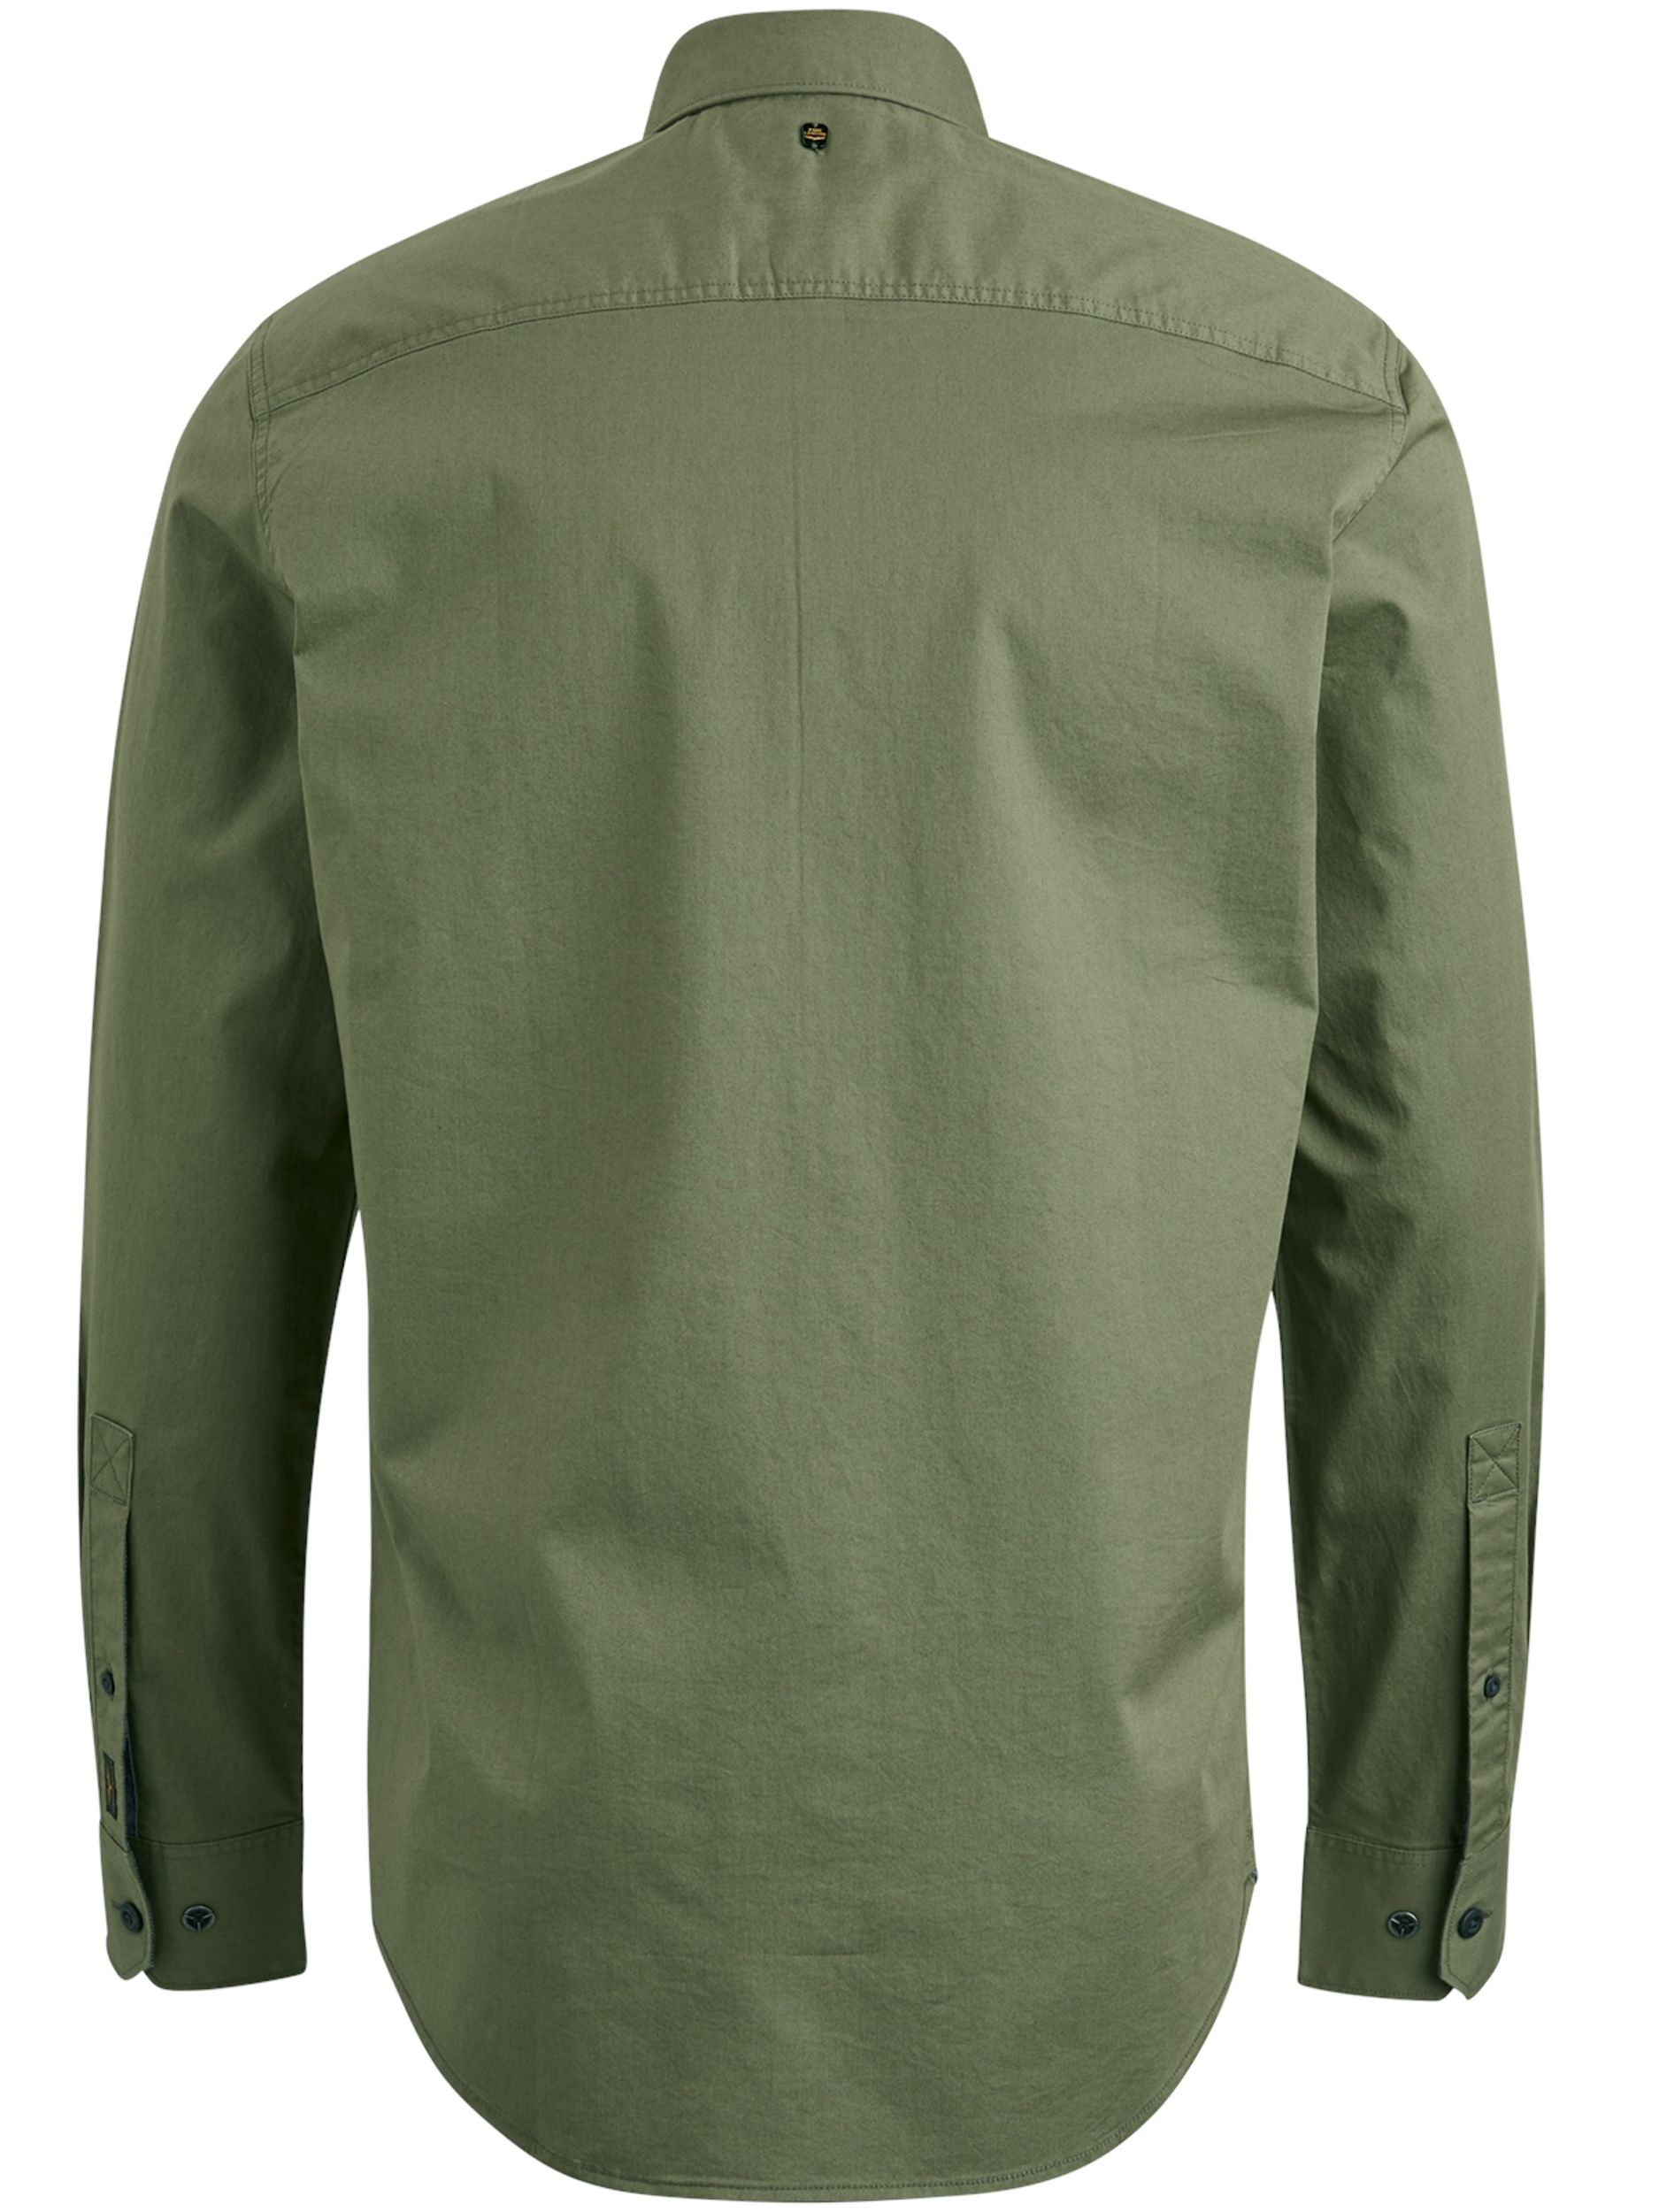 PME Legend Casual Overhemd LM Groen 095736-001-L